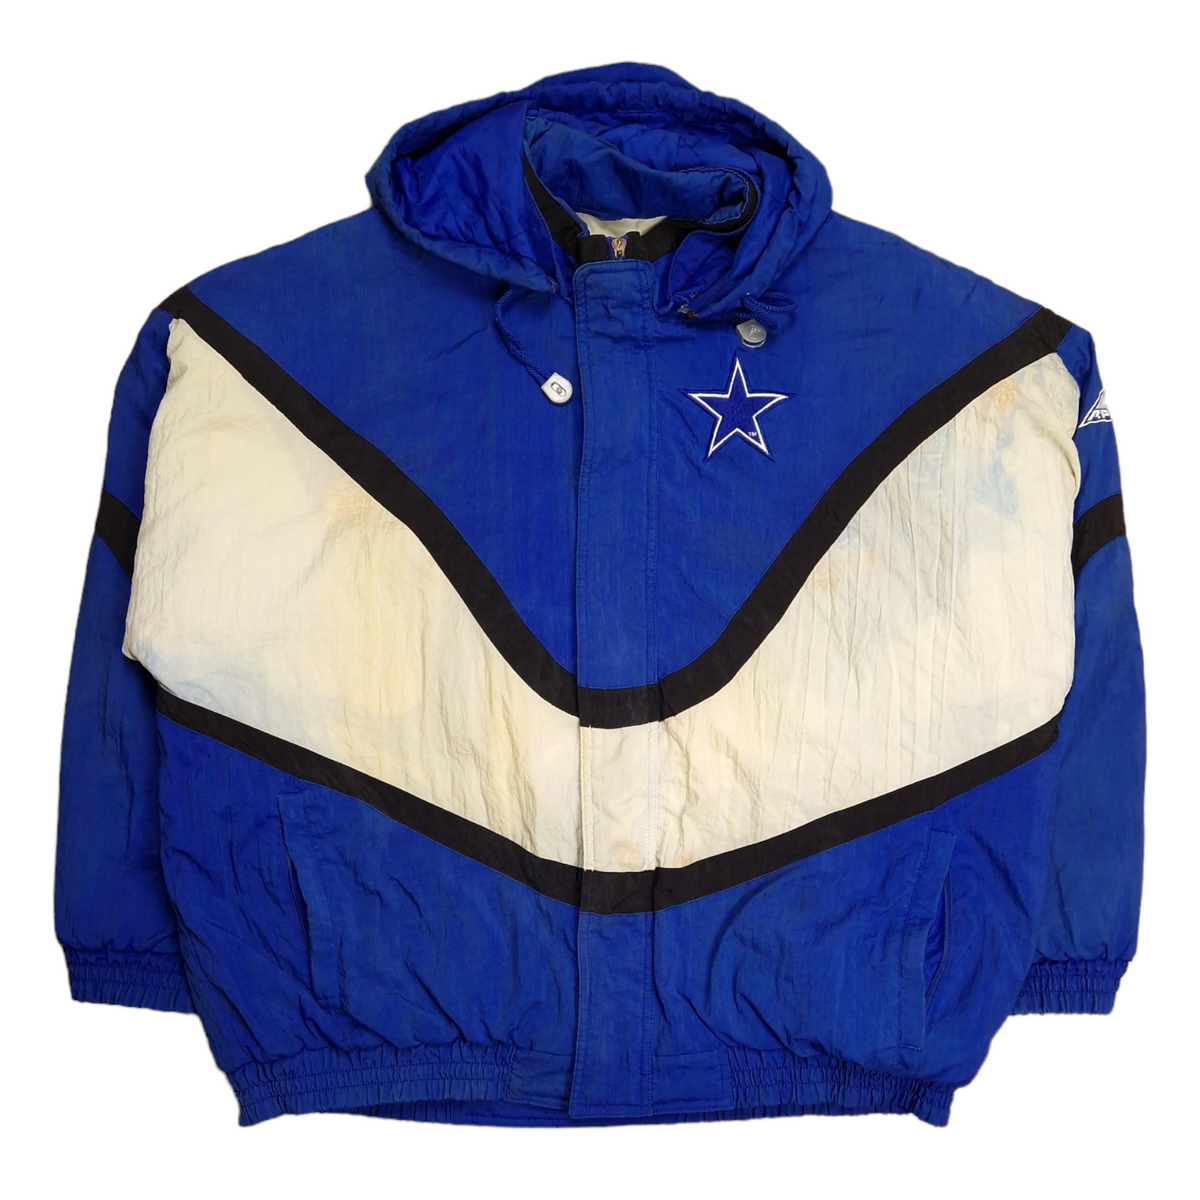 90's Apex One NFL Dallas Cowboys Jacket - Size XL